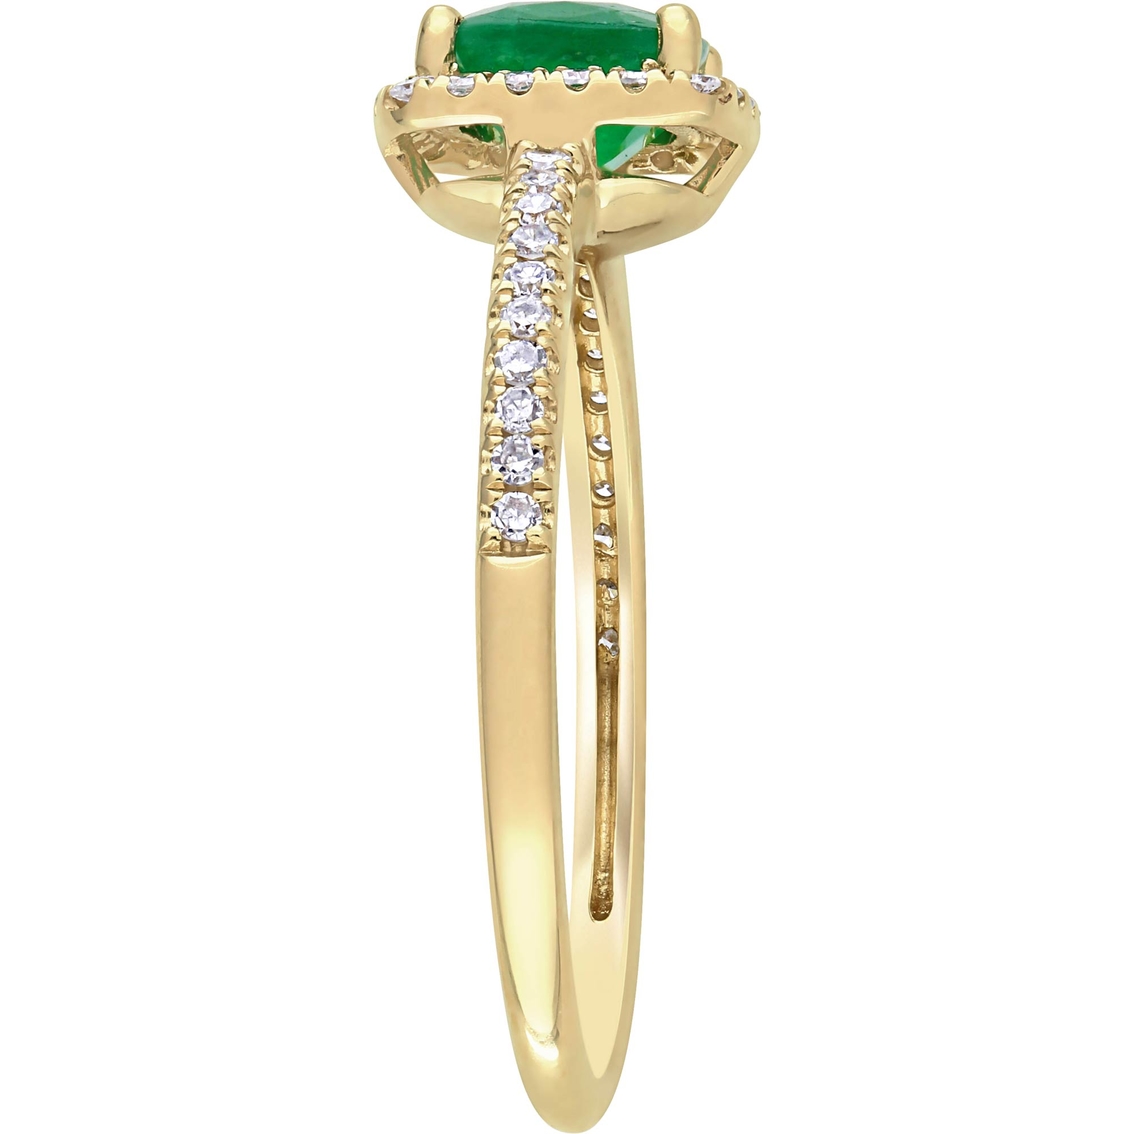 Sofia B. 14K Yellow Gold Cushion Cut Emerald and 1/5 CTW Diamond Halo Ring - Image 3 of 4